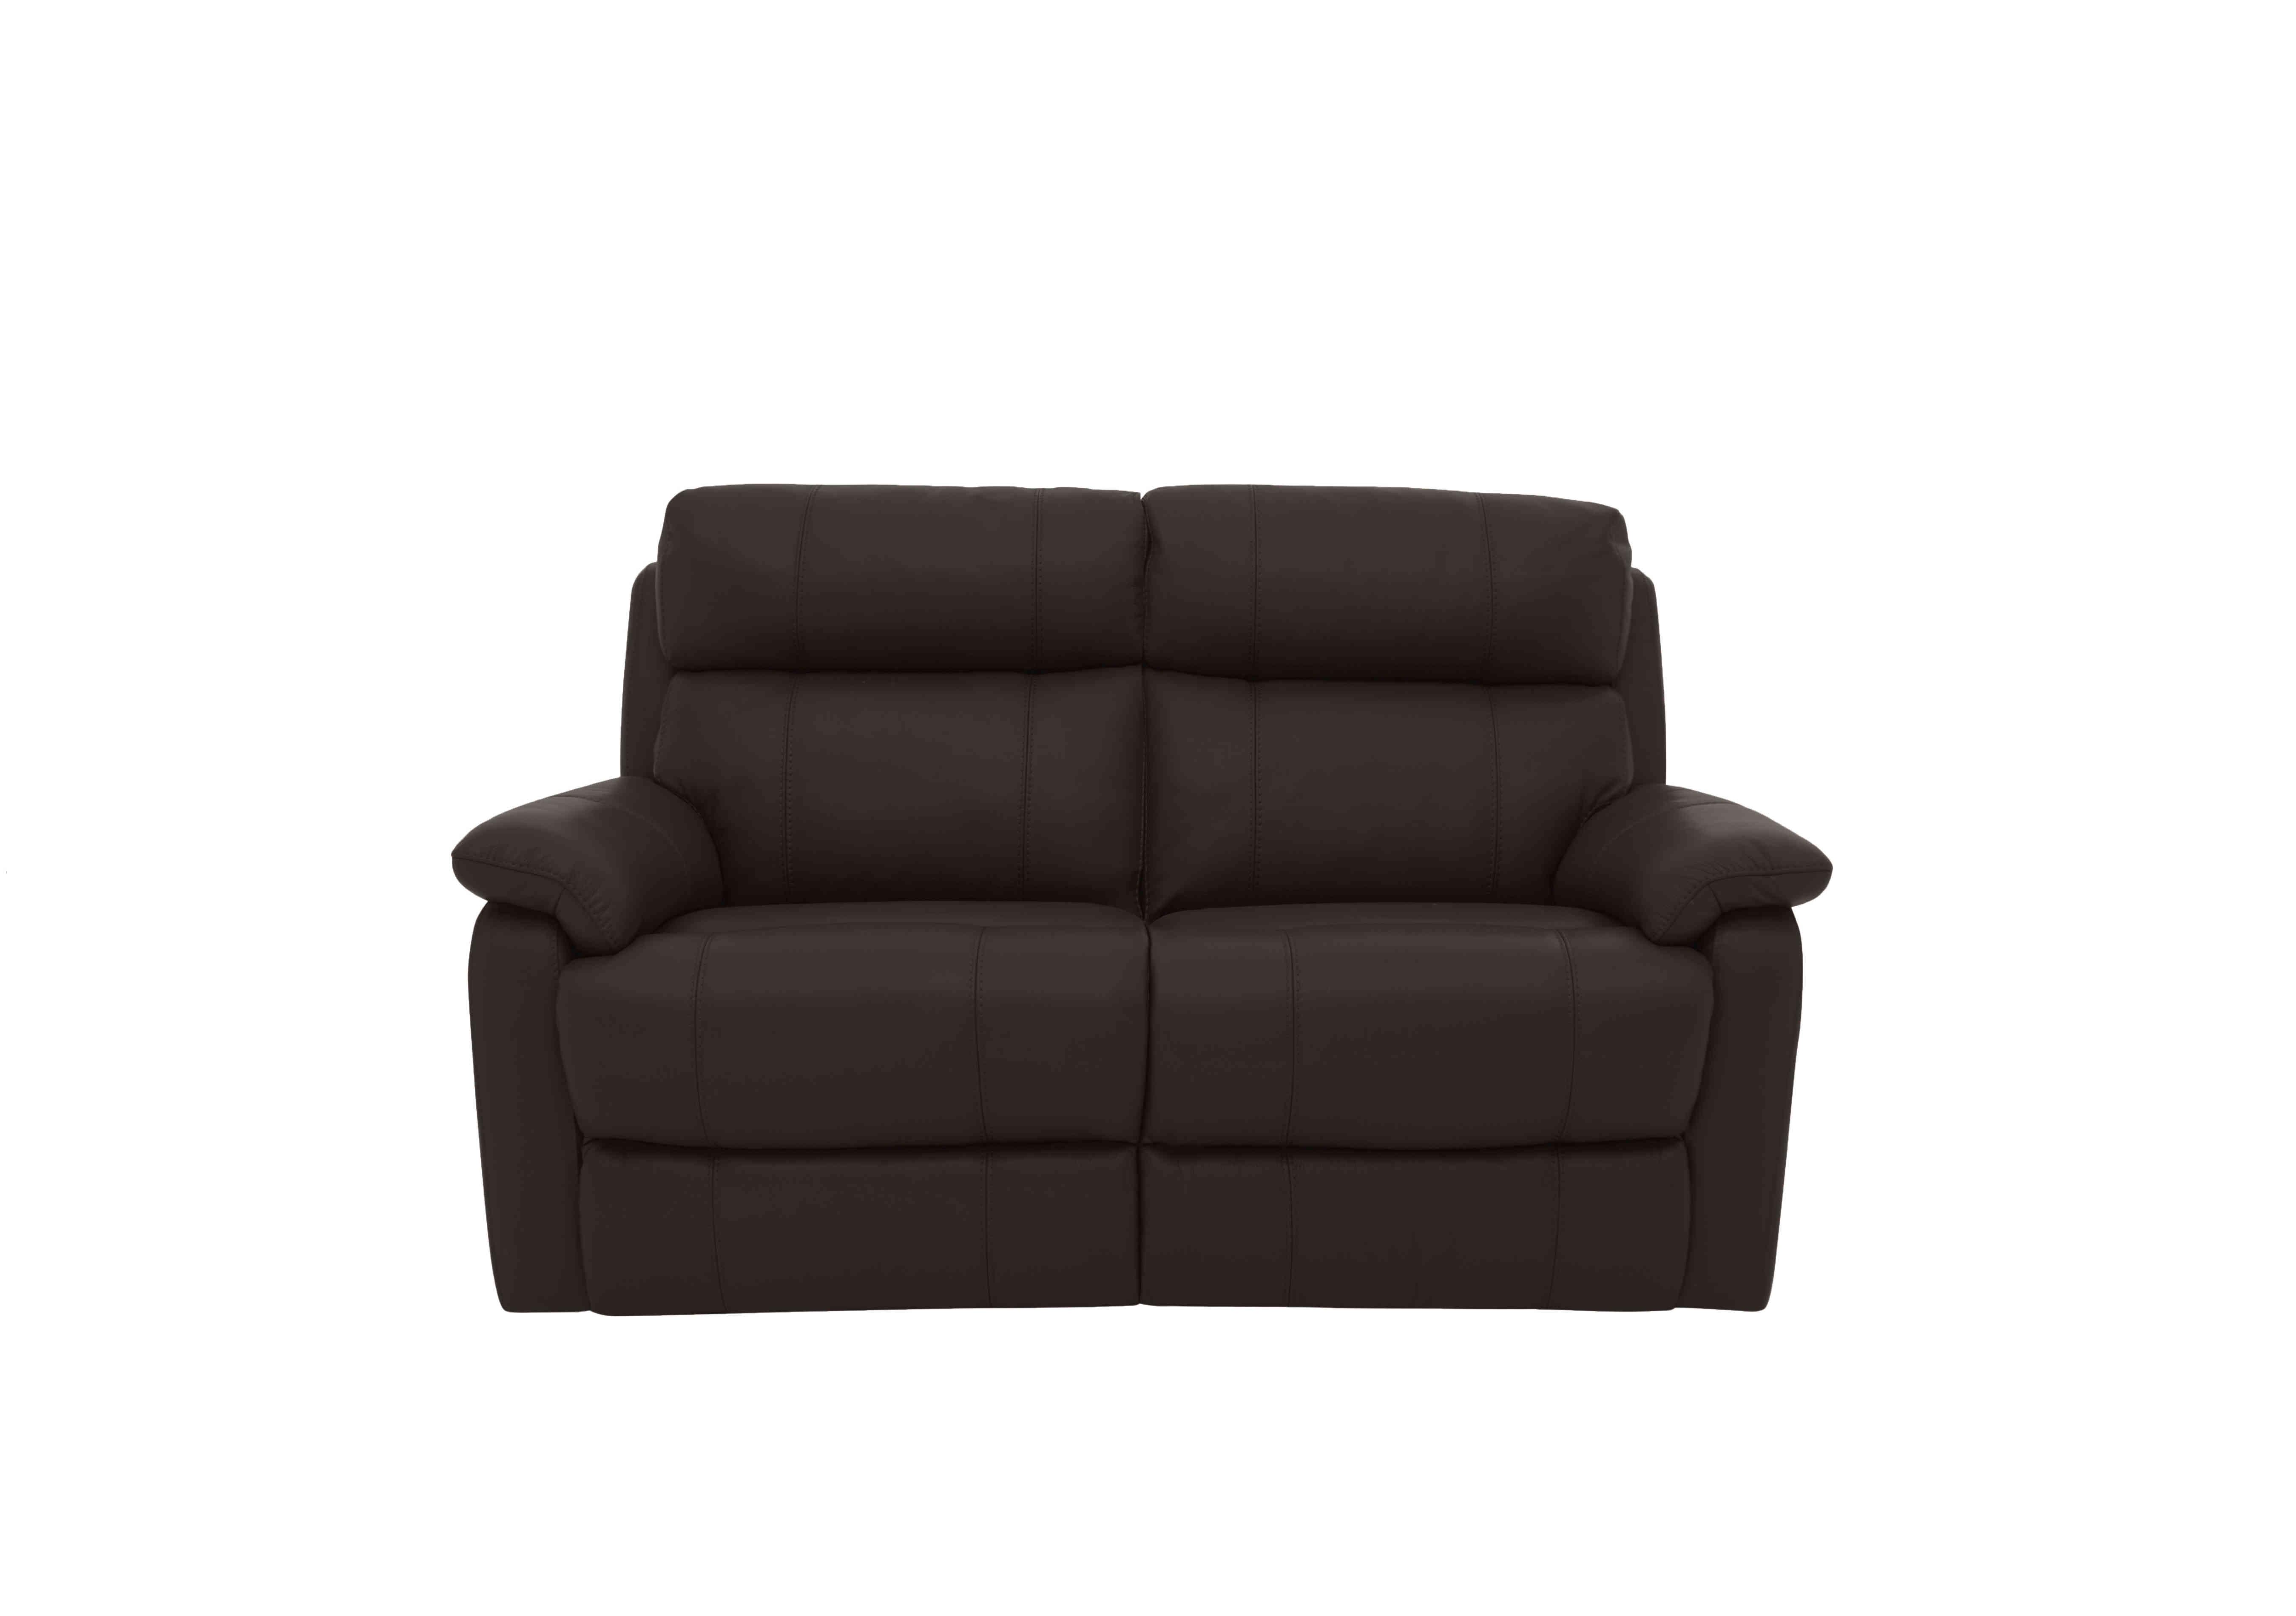 Relax Station Komodo 2 Seater Power Leather Sofa in Bv-1748 Dark Chocolate on Furniture Village